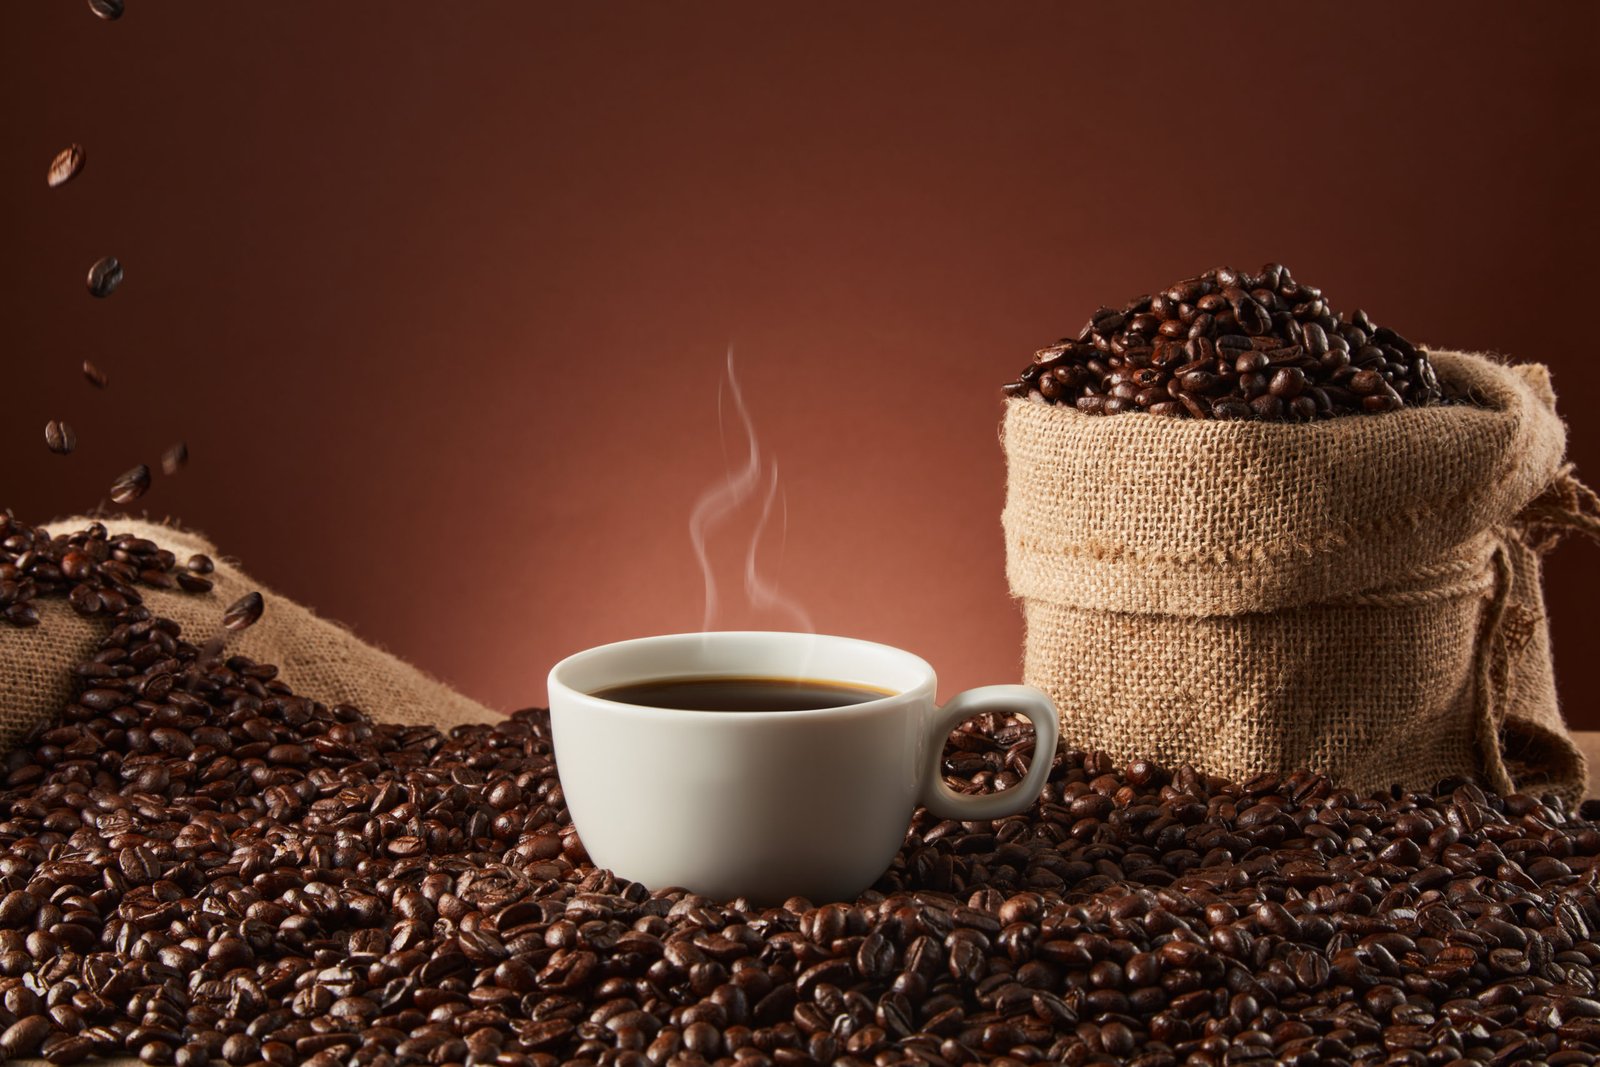 How to Make Coffee with an Aeropress